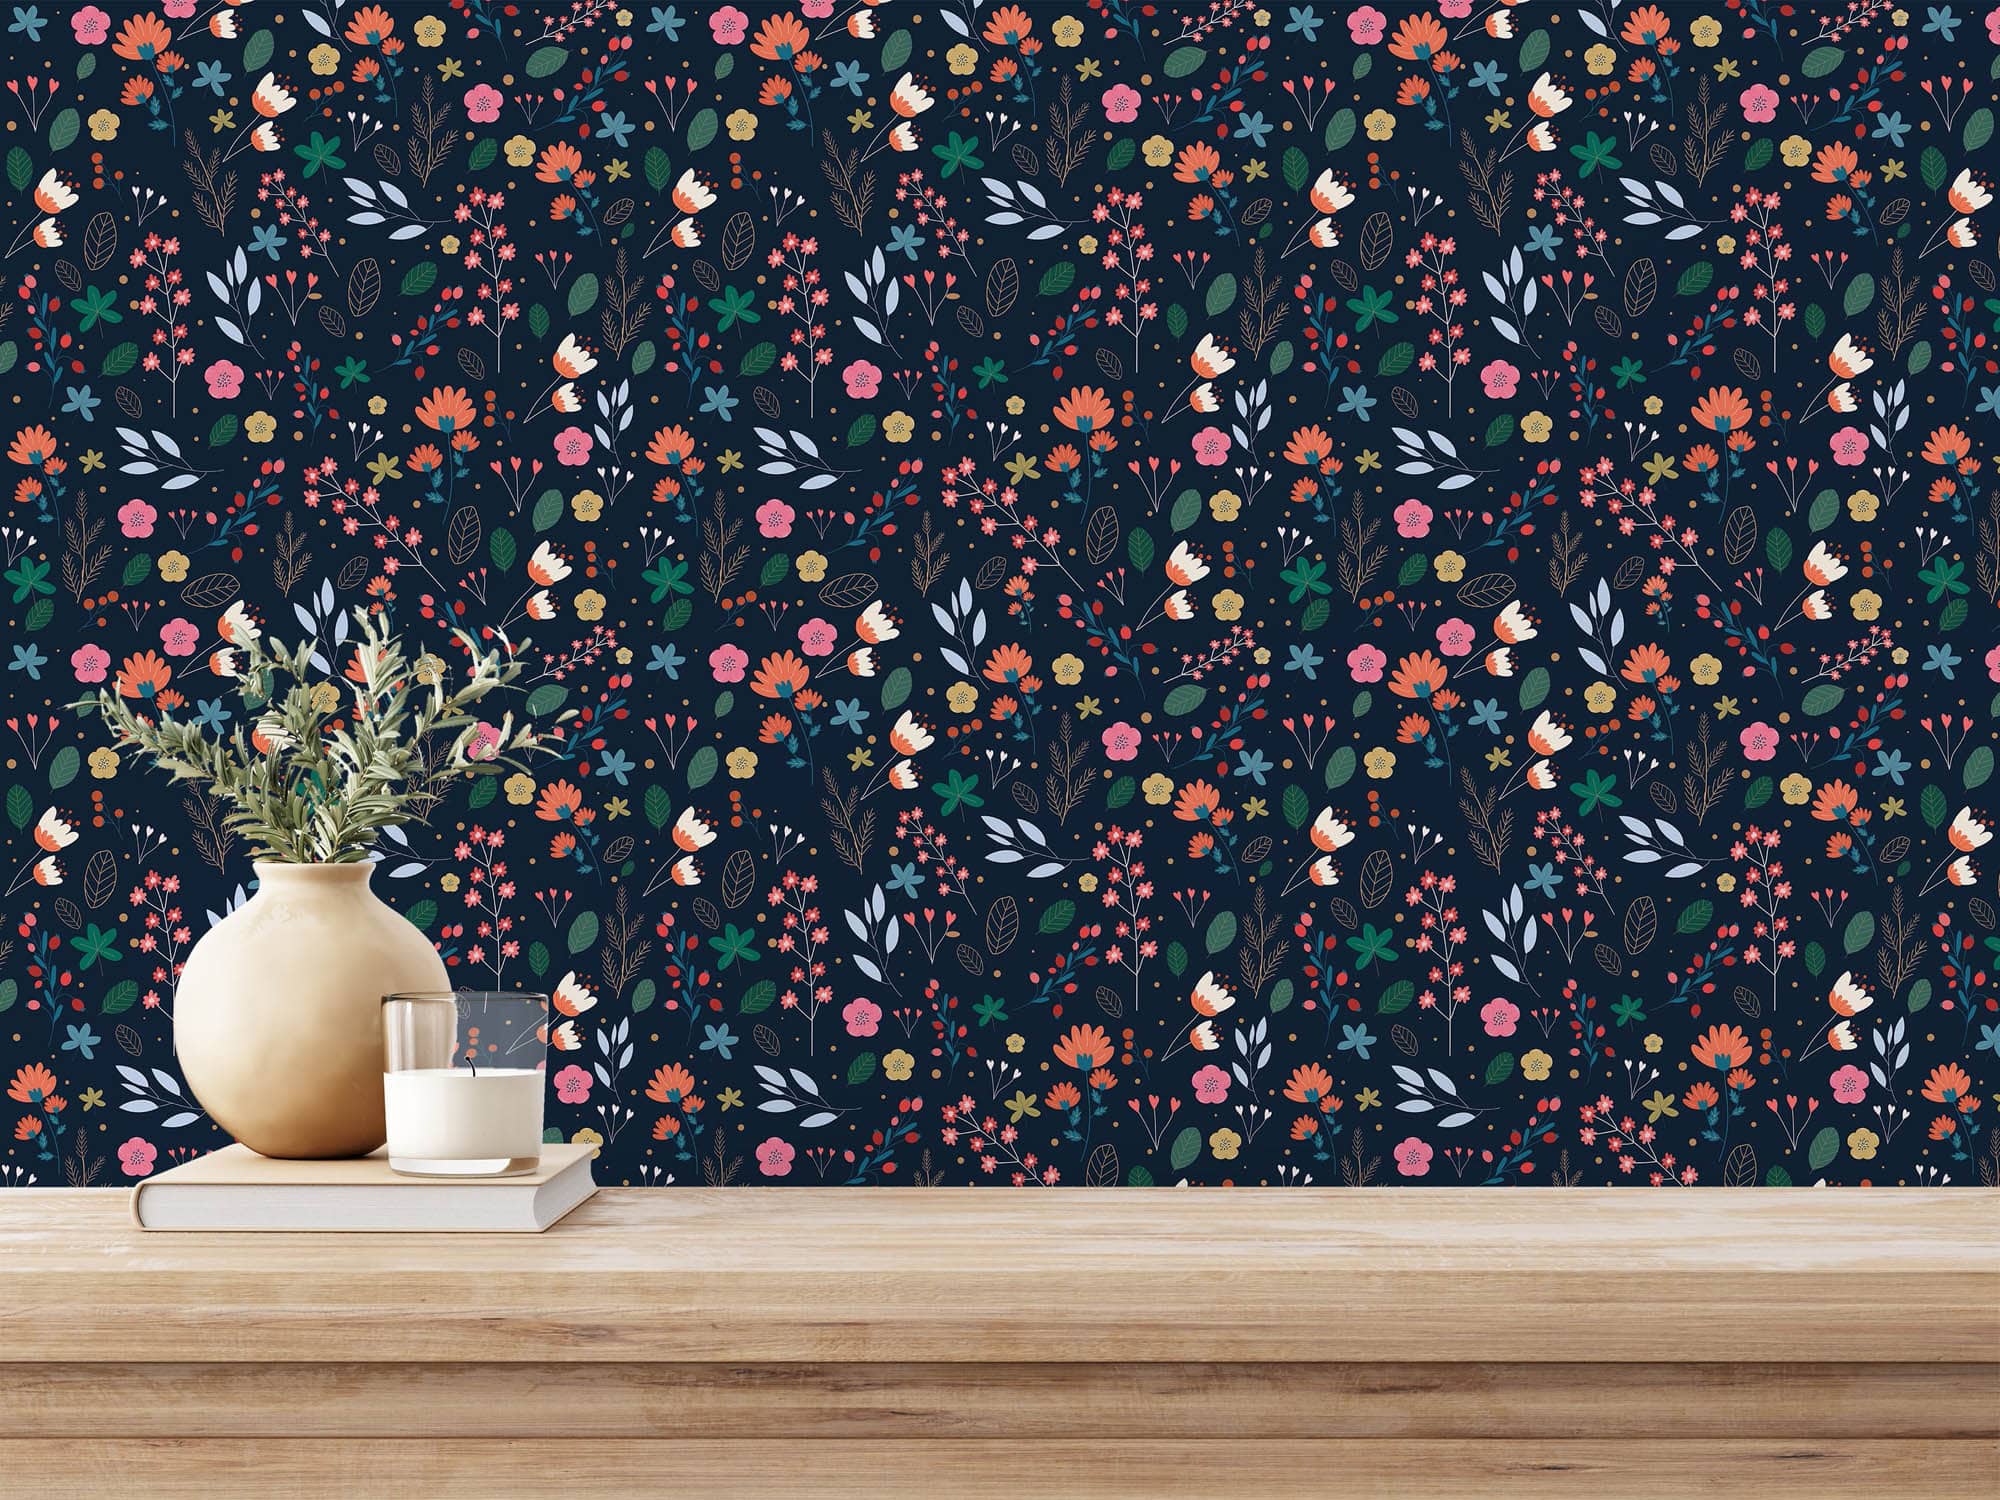 bedroom self-adhesive wallpaper